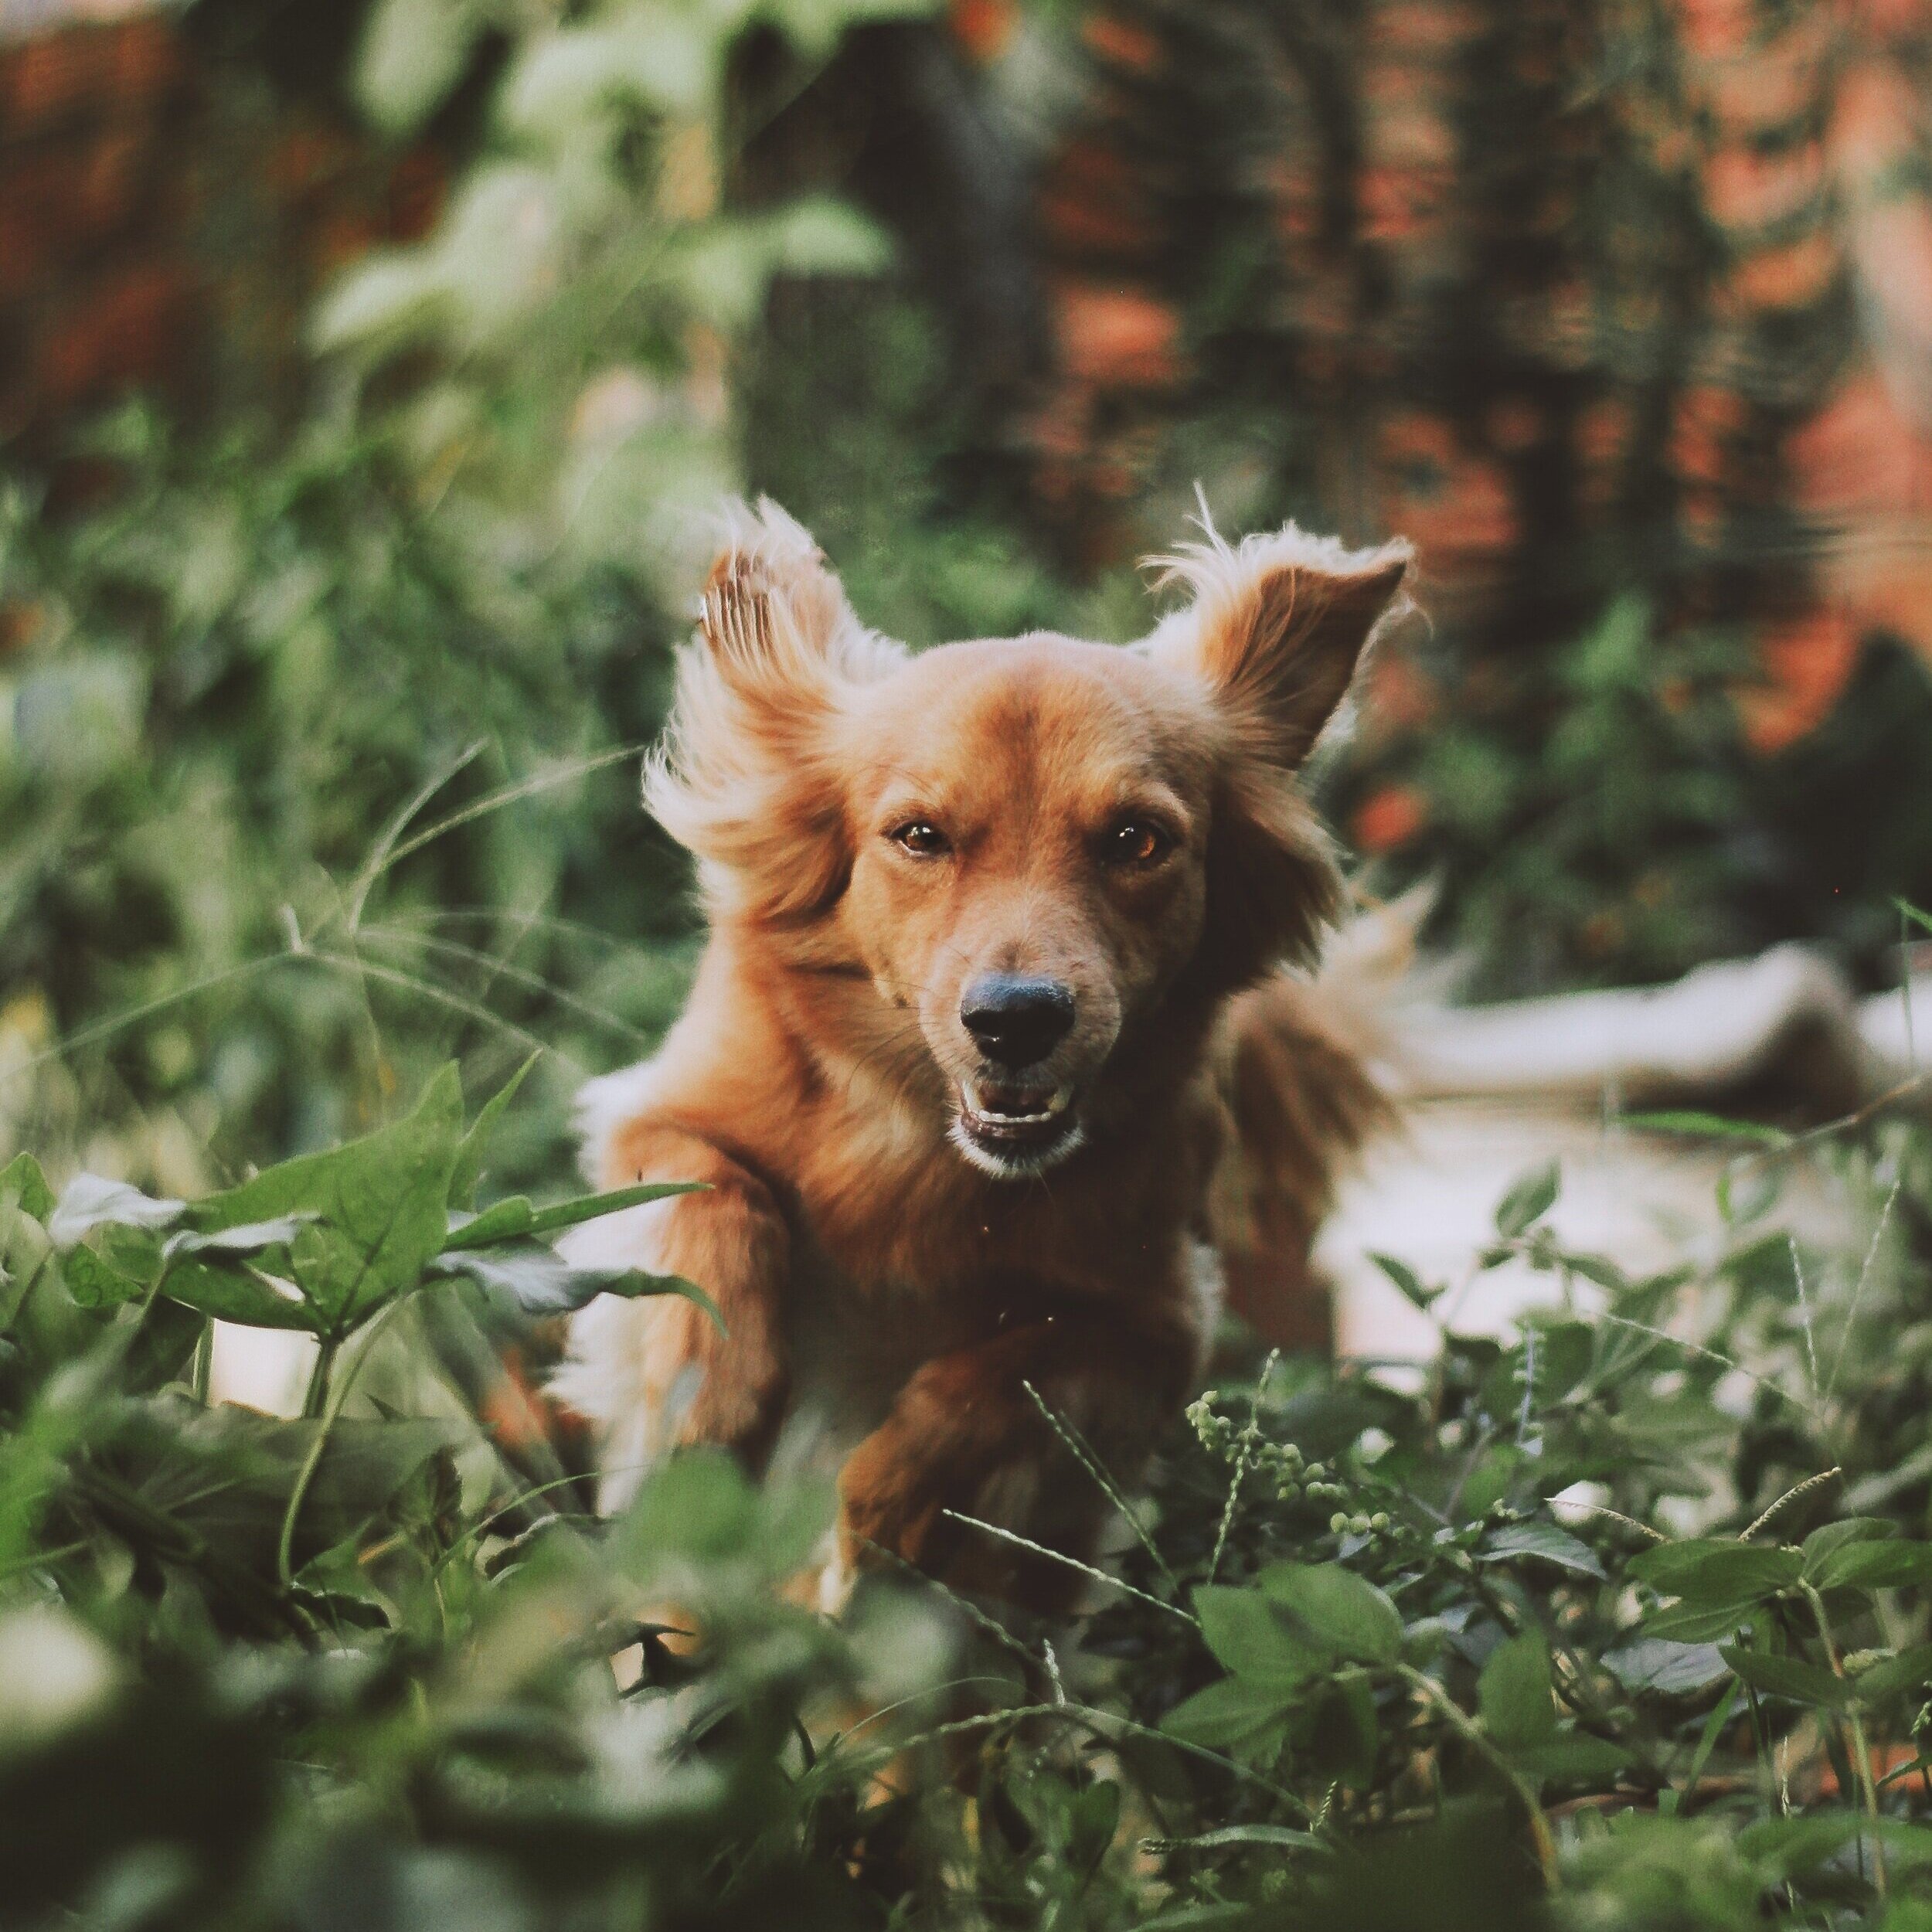 medium-coated-tan-dog-running-on-green-plants-photography-939523.jpg